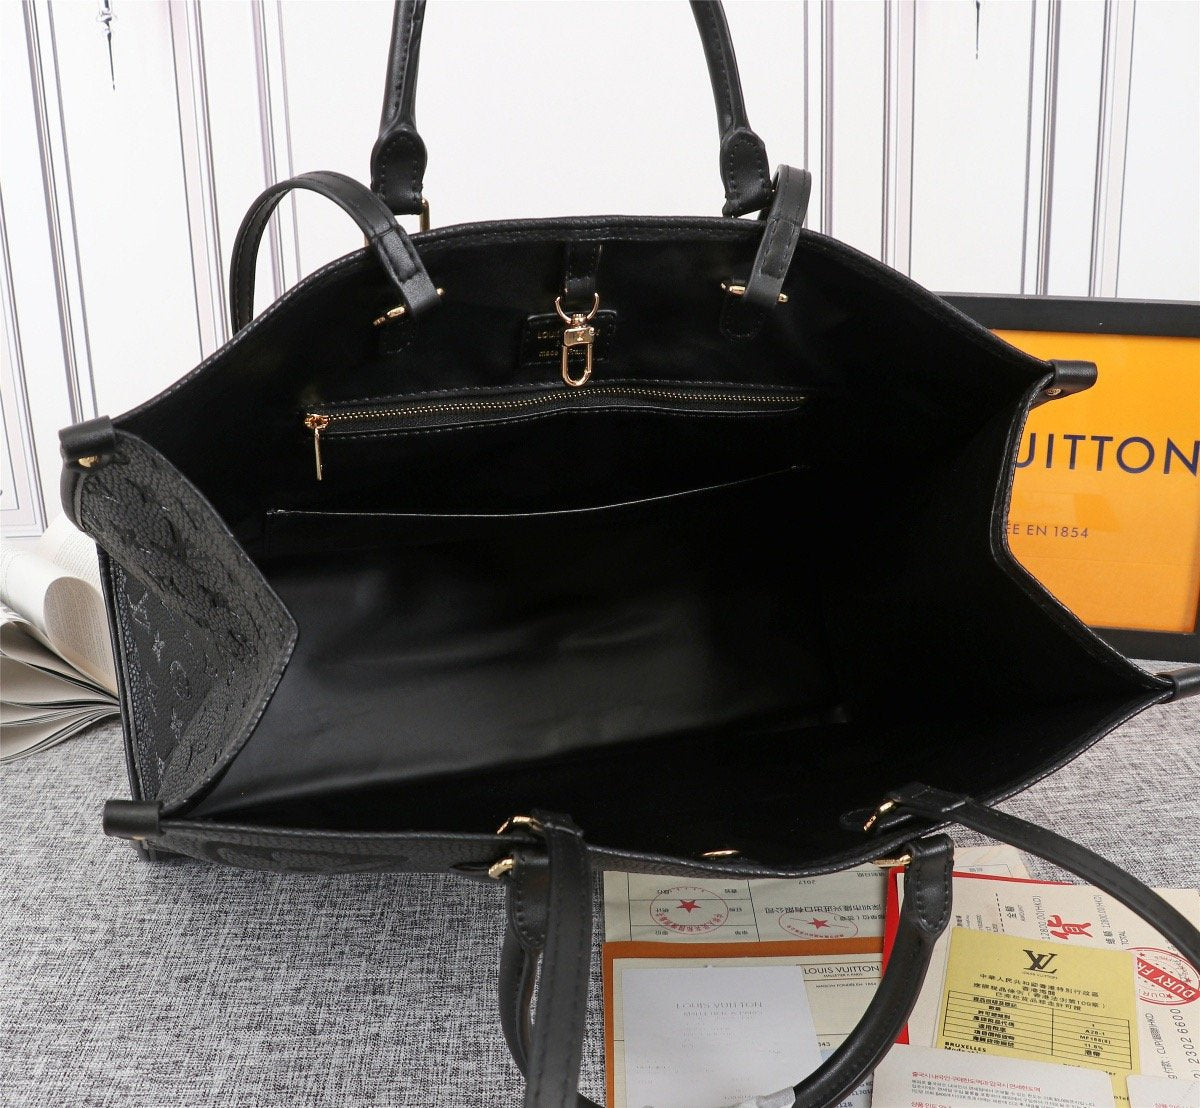 BL - High Quality Bags LUV 296